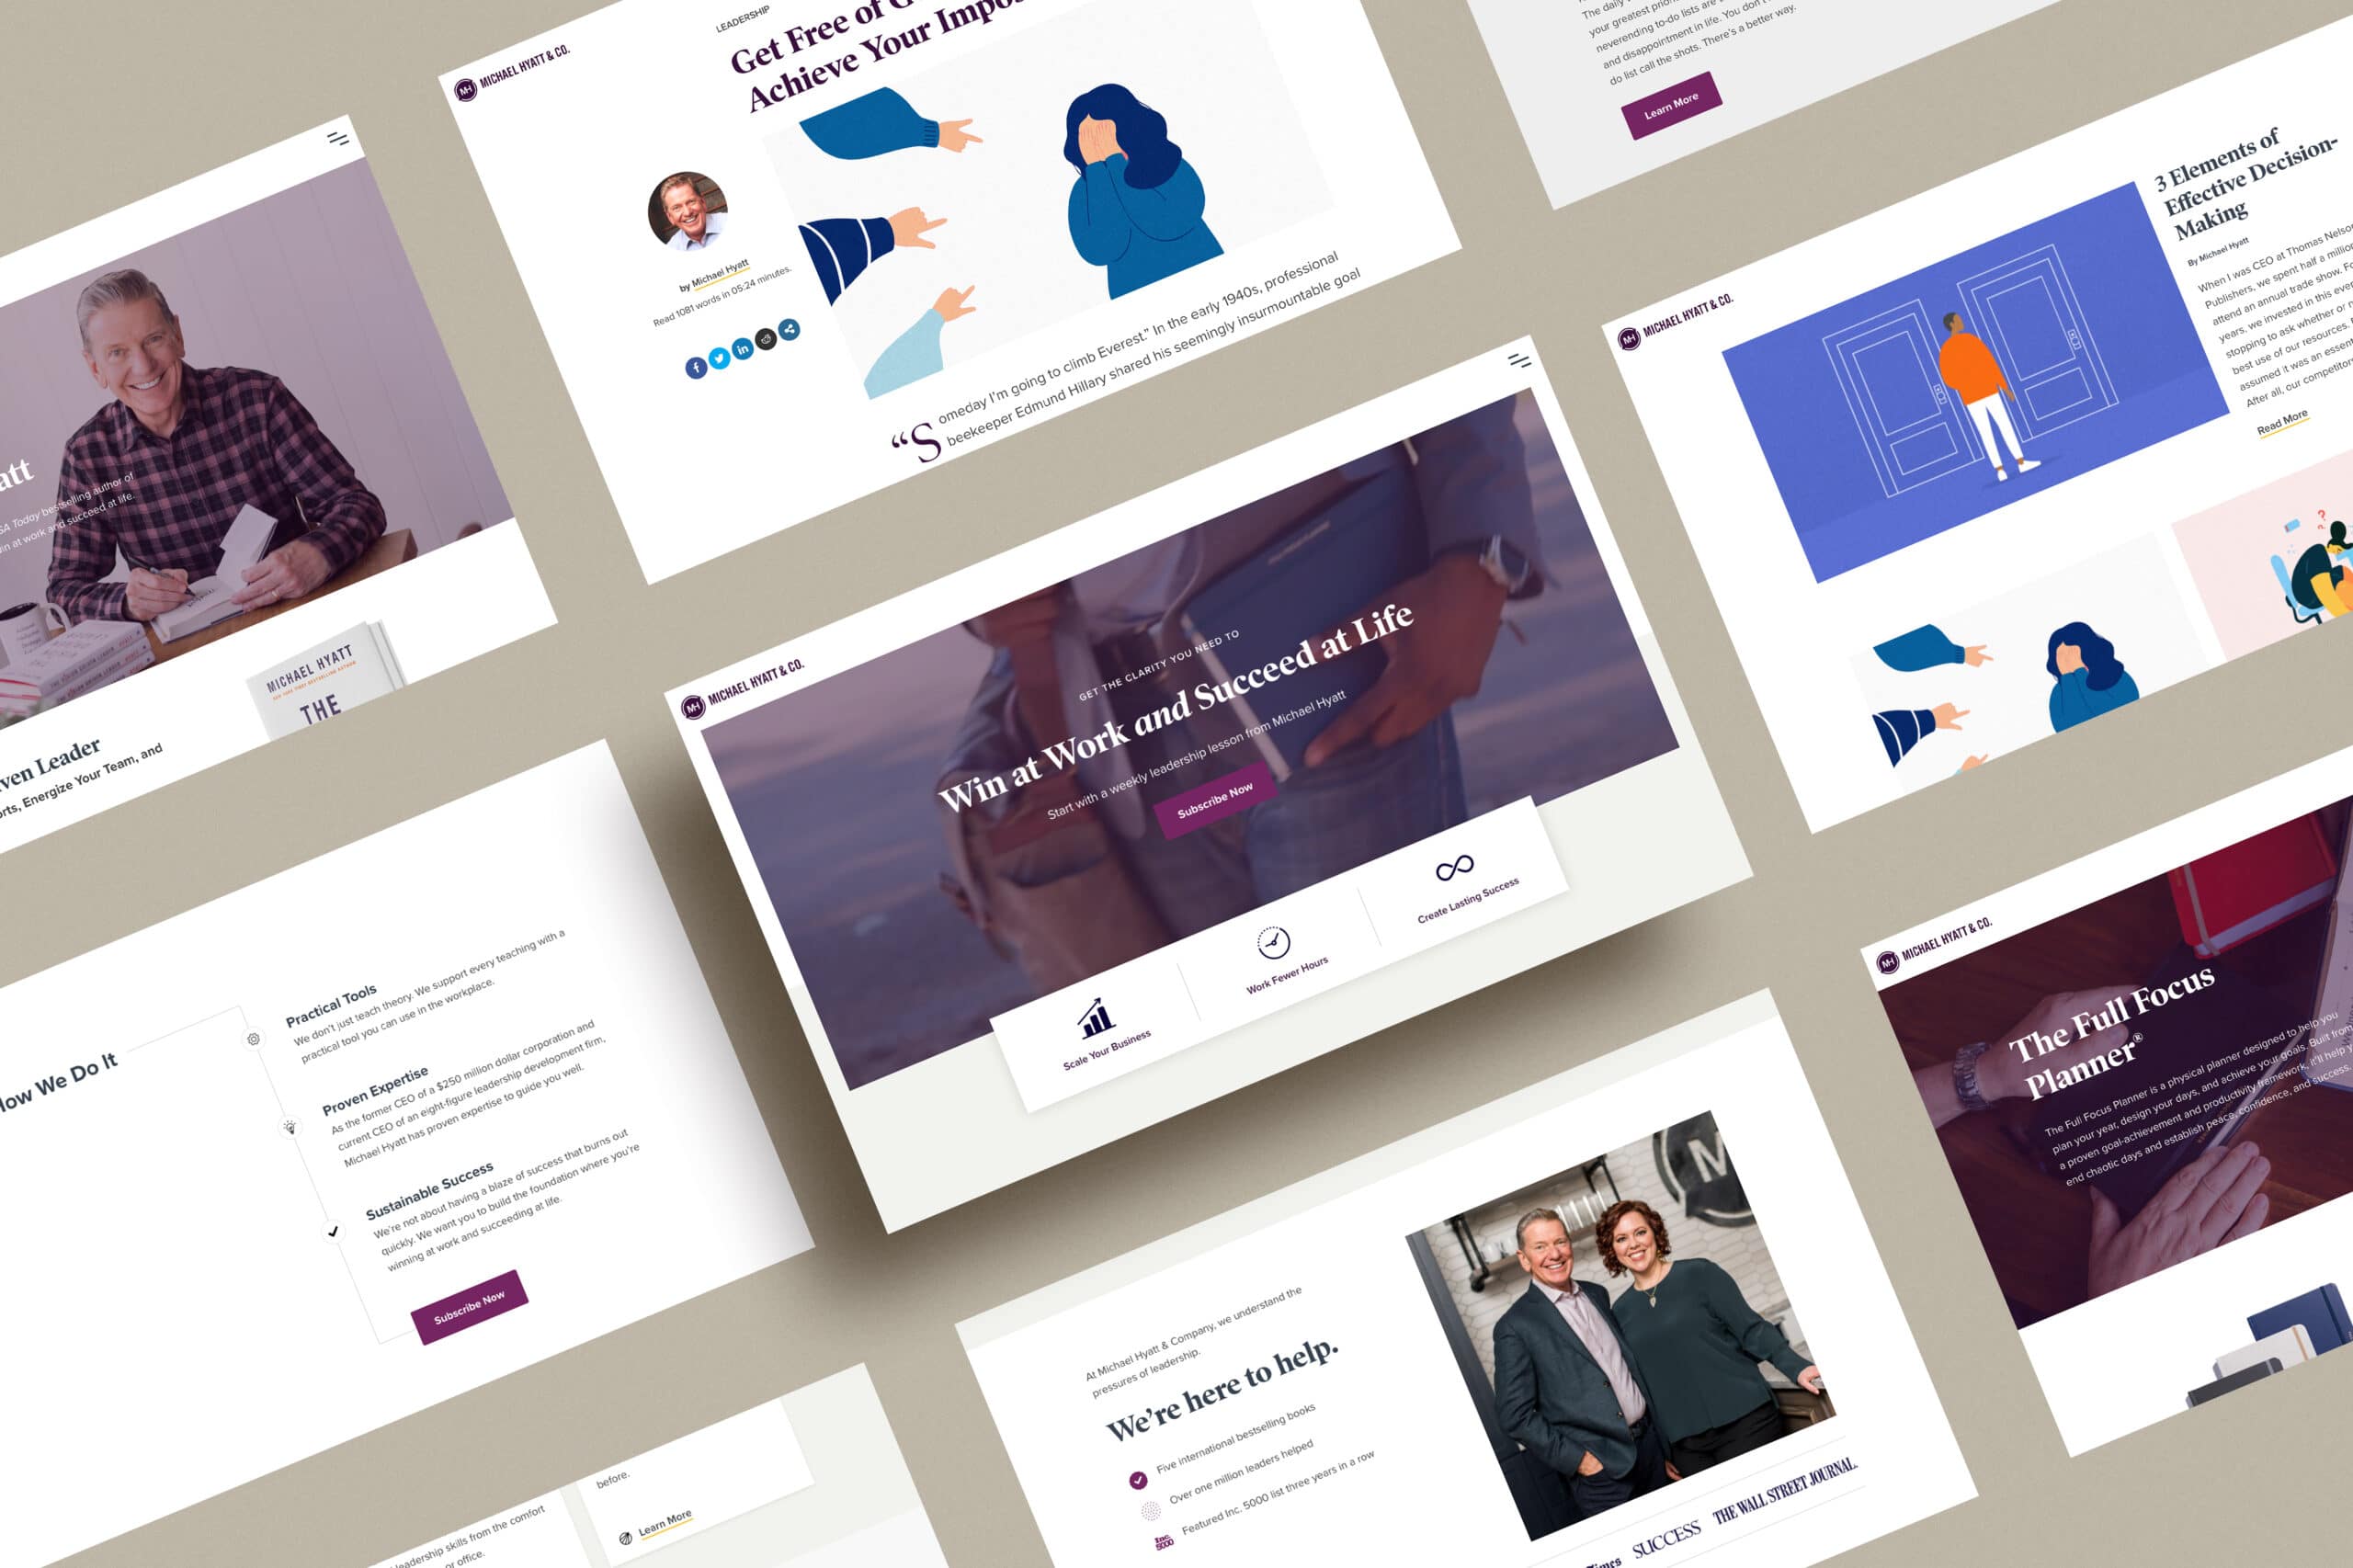 Michael Hyatt website redesign with the Enneagram brand strategy